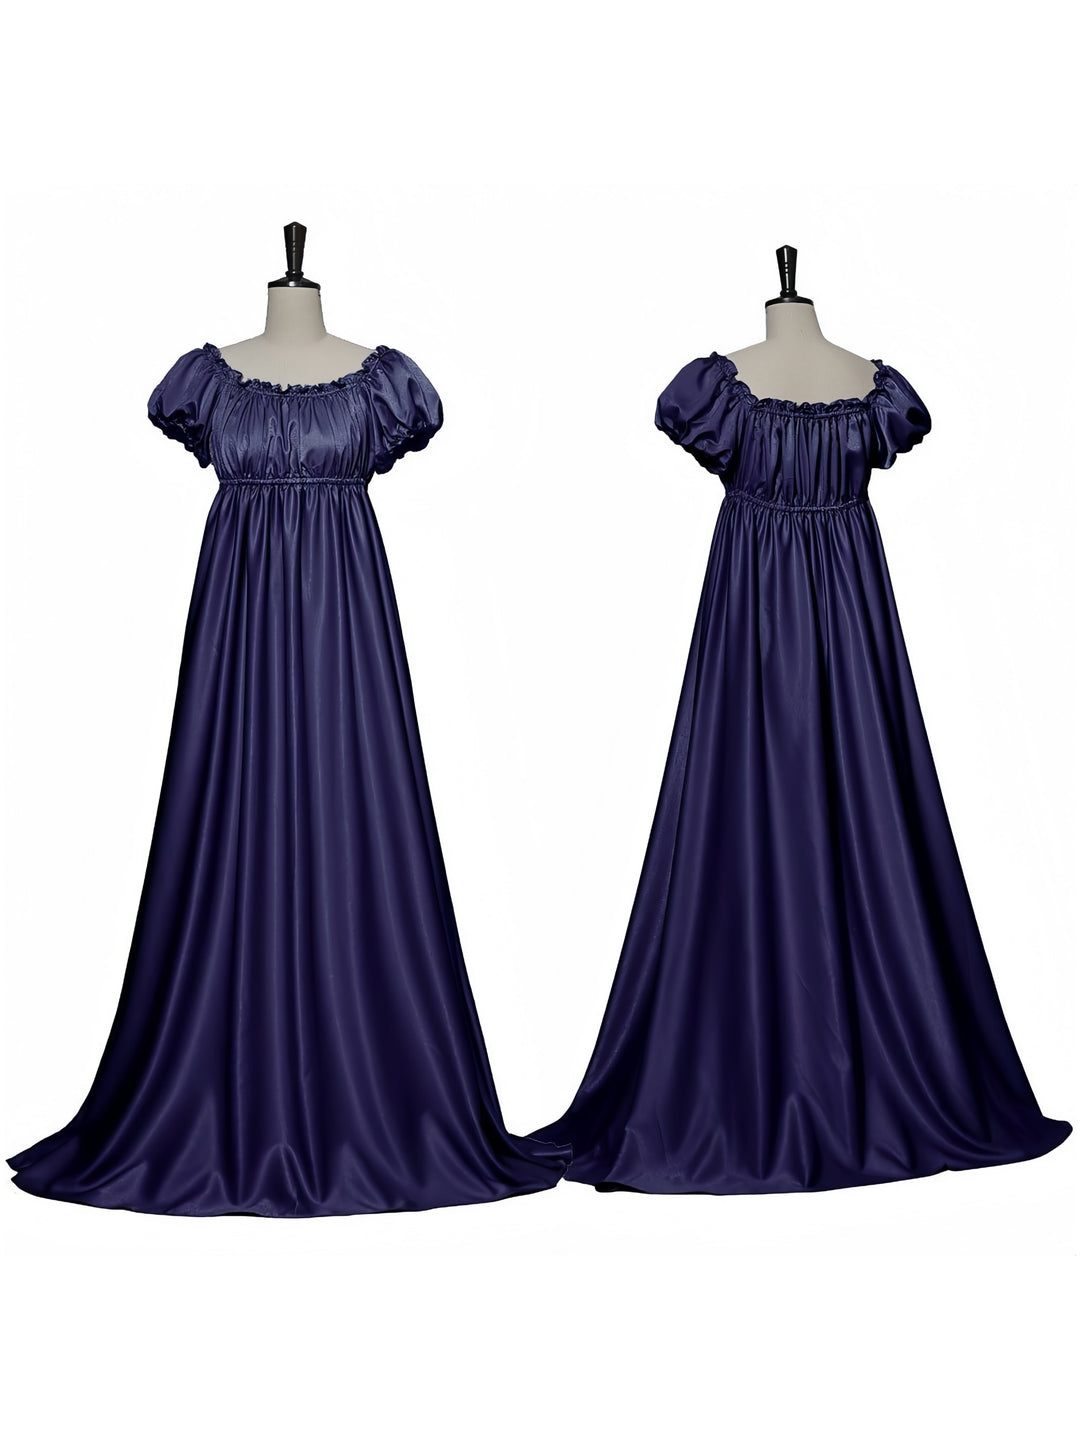 A-Line/Princess Jewel Neck Short Sleeves Floor-Length Vintage Dress with Ruffles